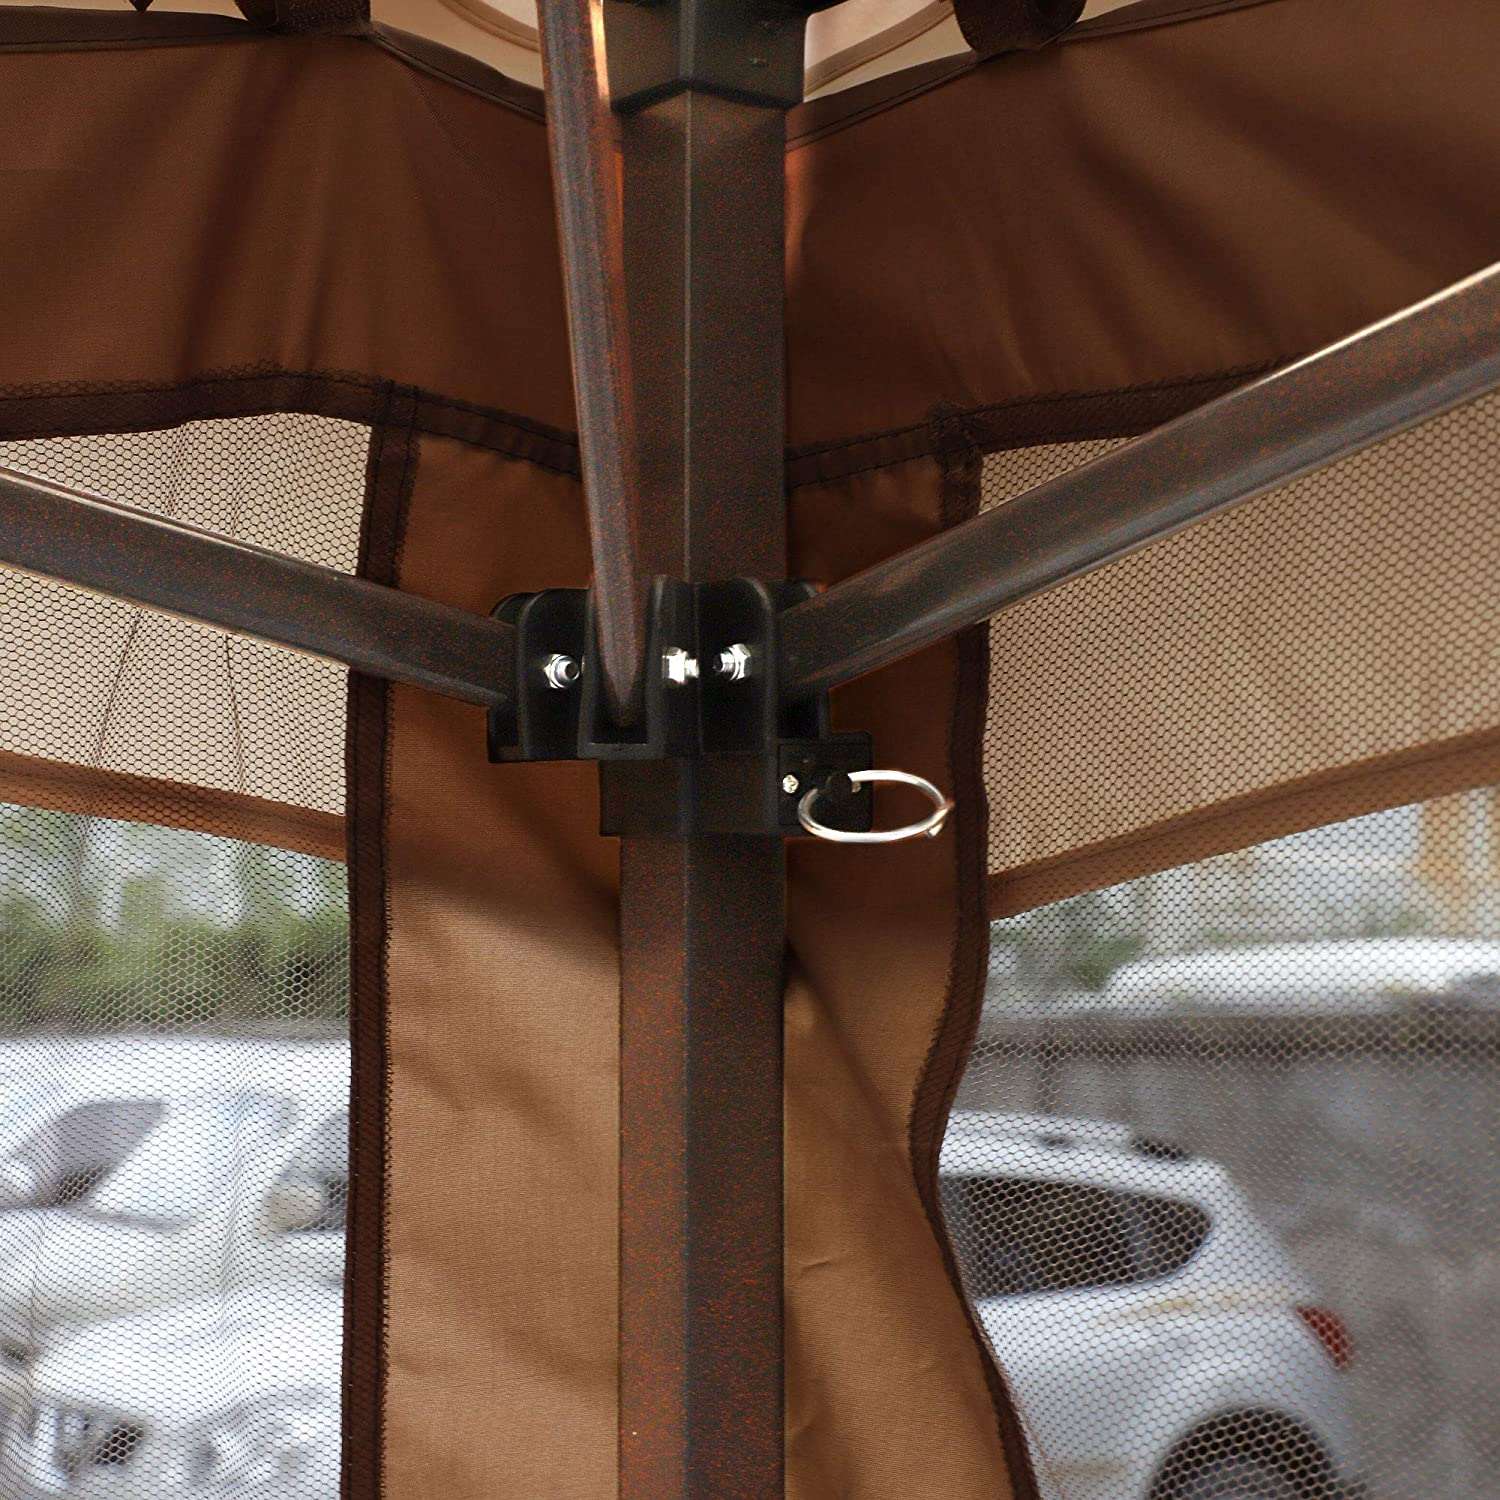 10X10 Outdoor Pop up Canopy Tent Height Adjustable Gazebo for Patio,Garden,Backyard Sun Shelter